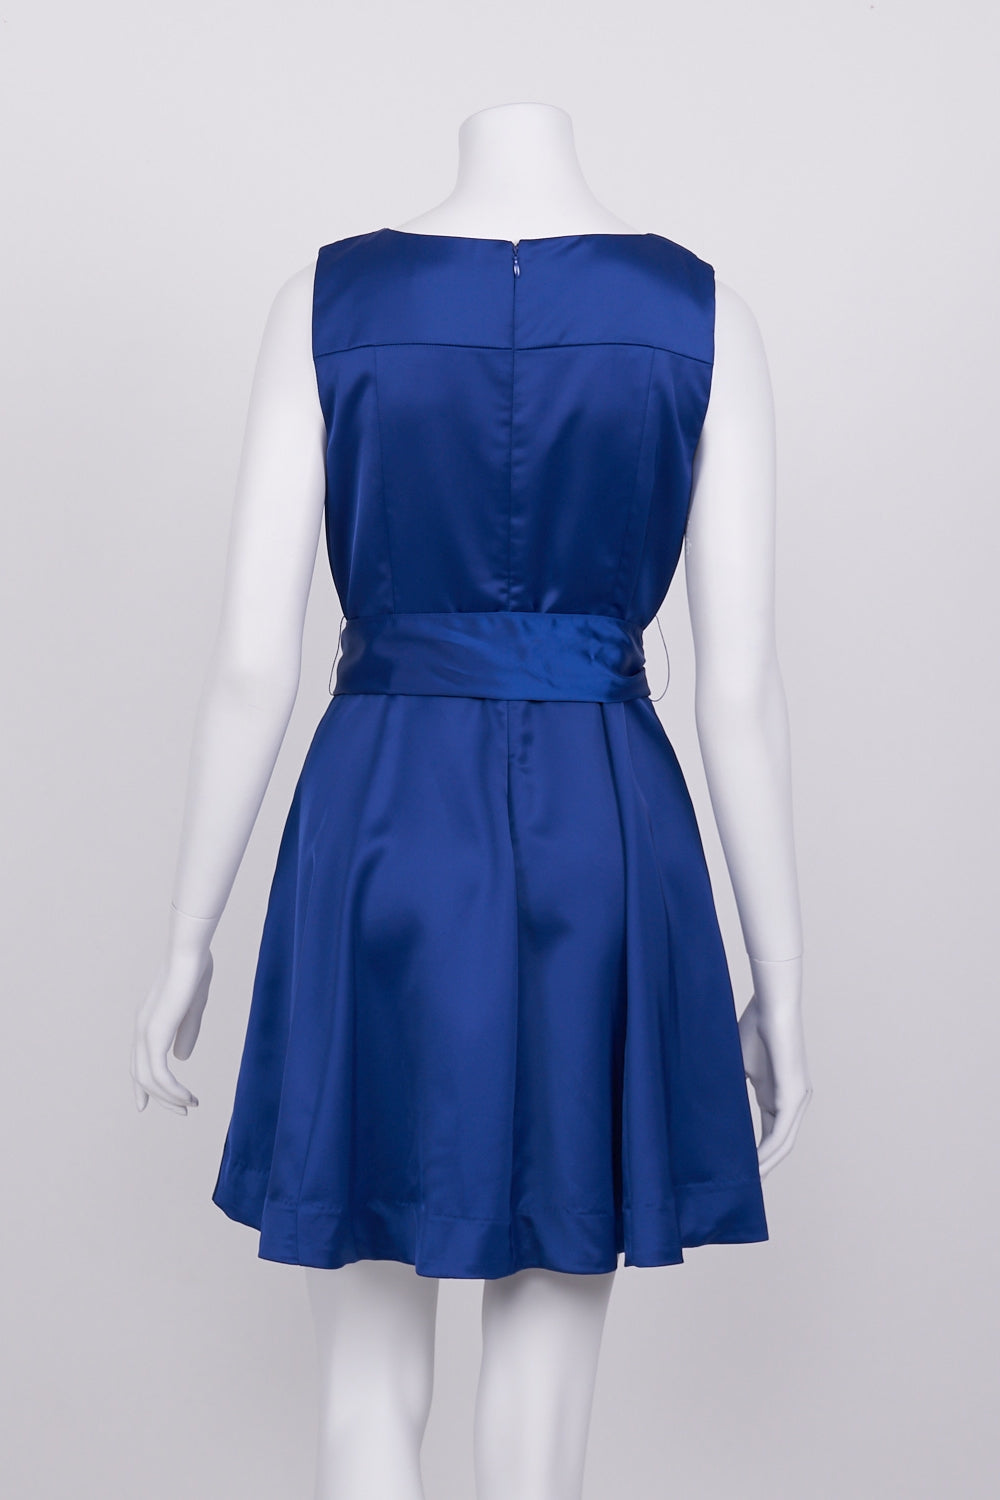 Bella Bleu Navy Pleated Sleeveless Dress 10